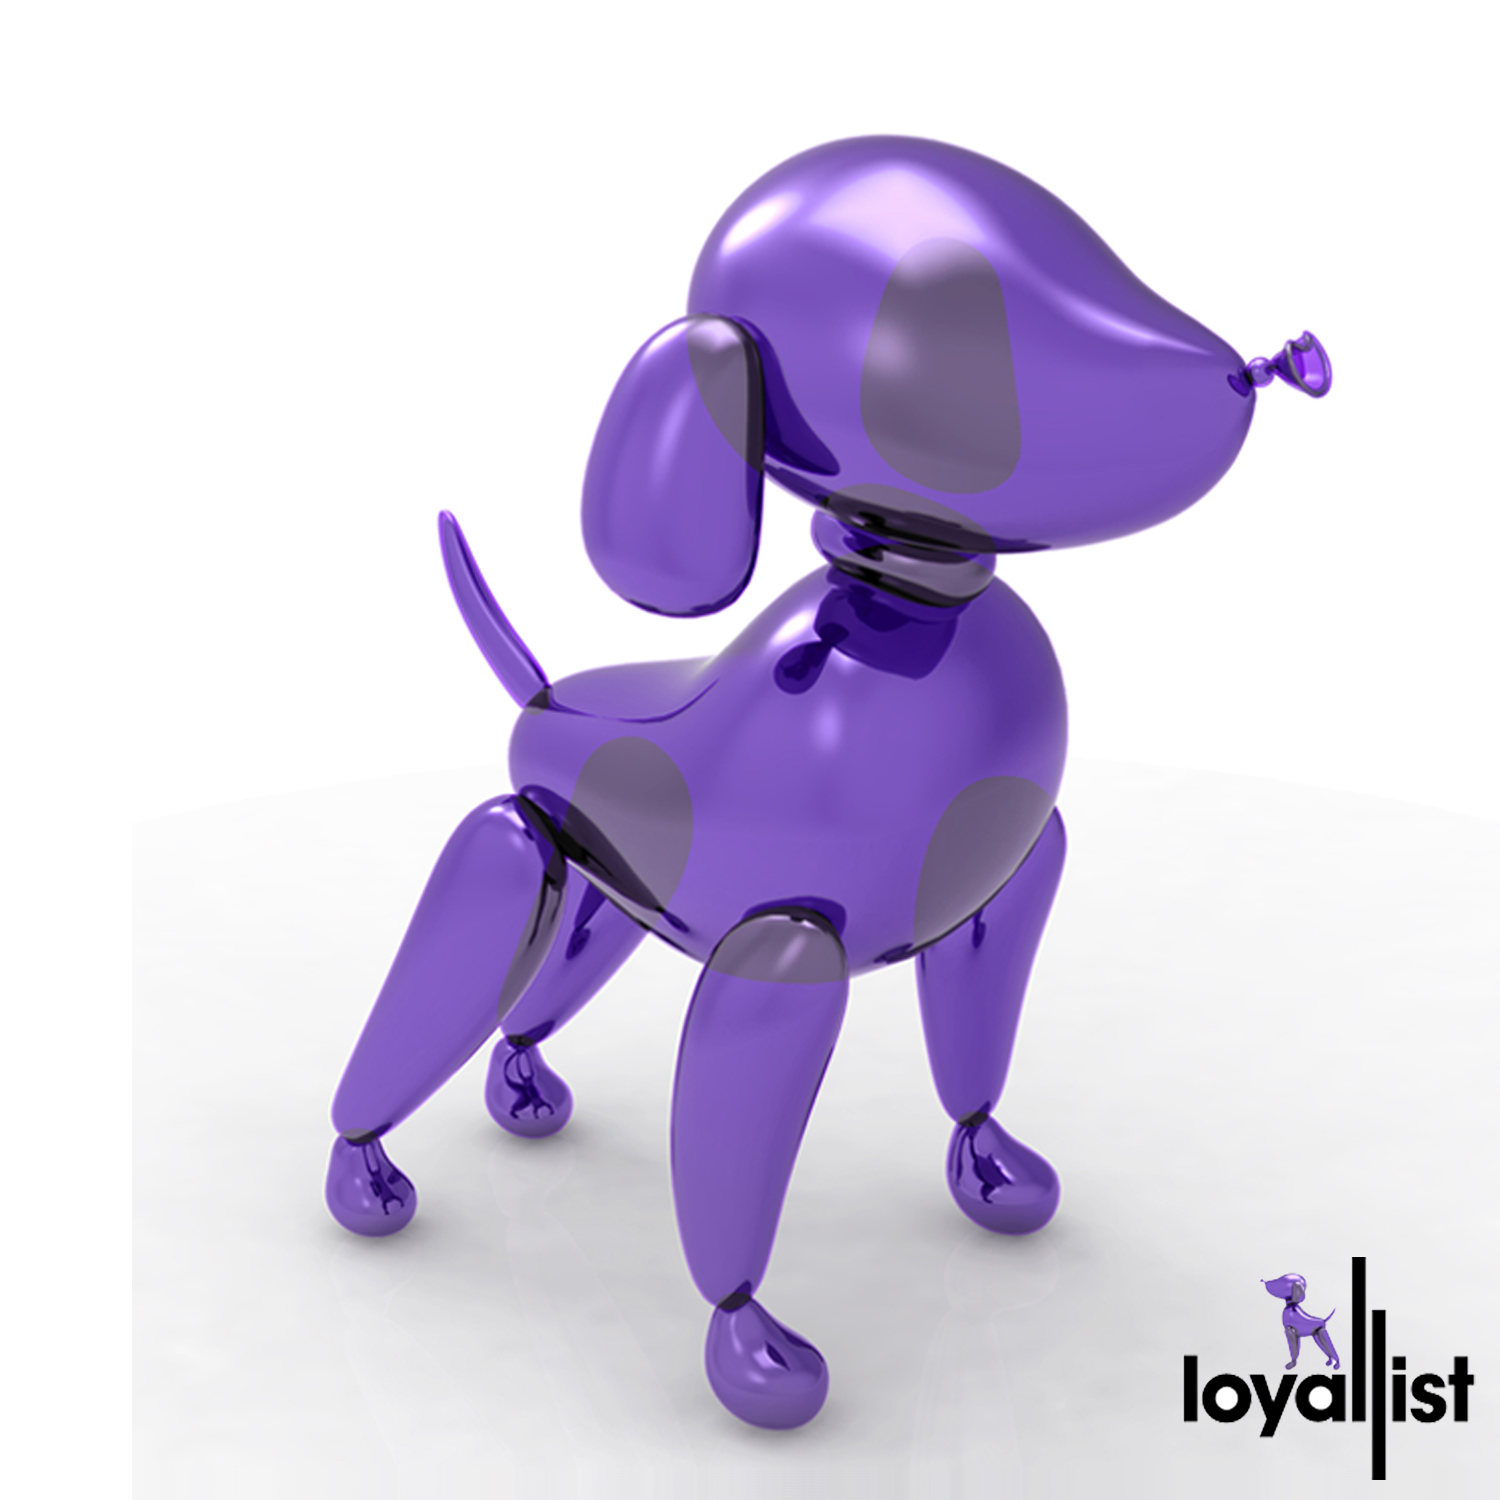 Bloomingdales-Loyalist-Dog-Mascot-1.jpg